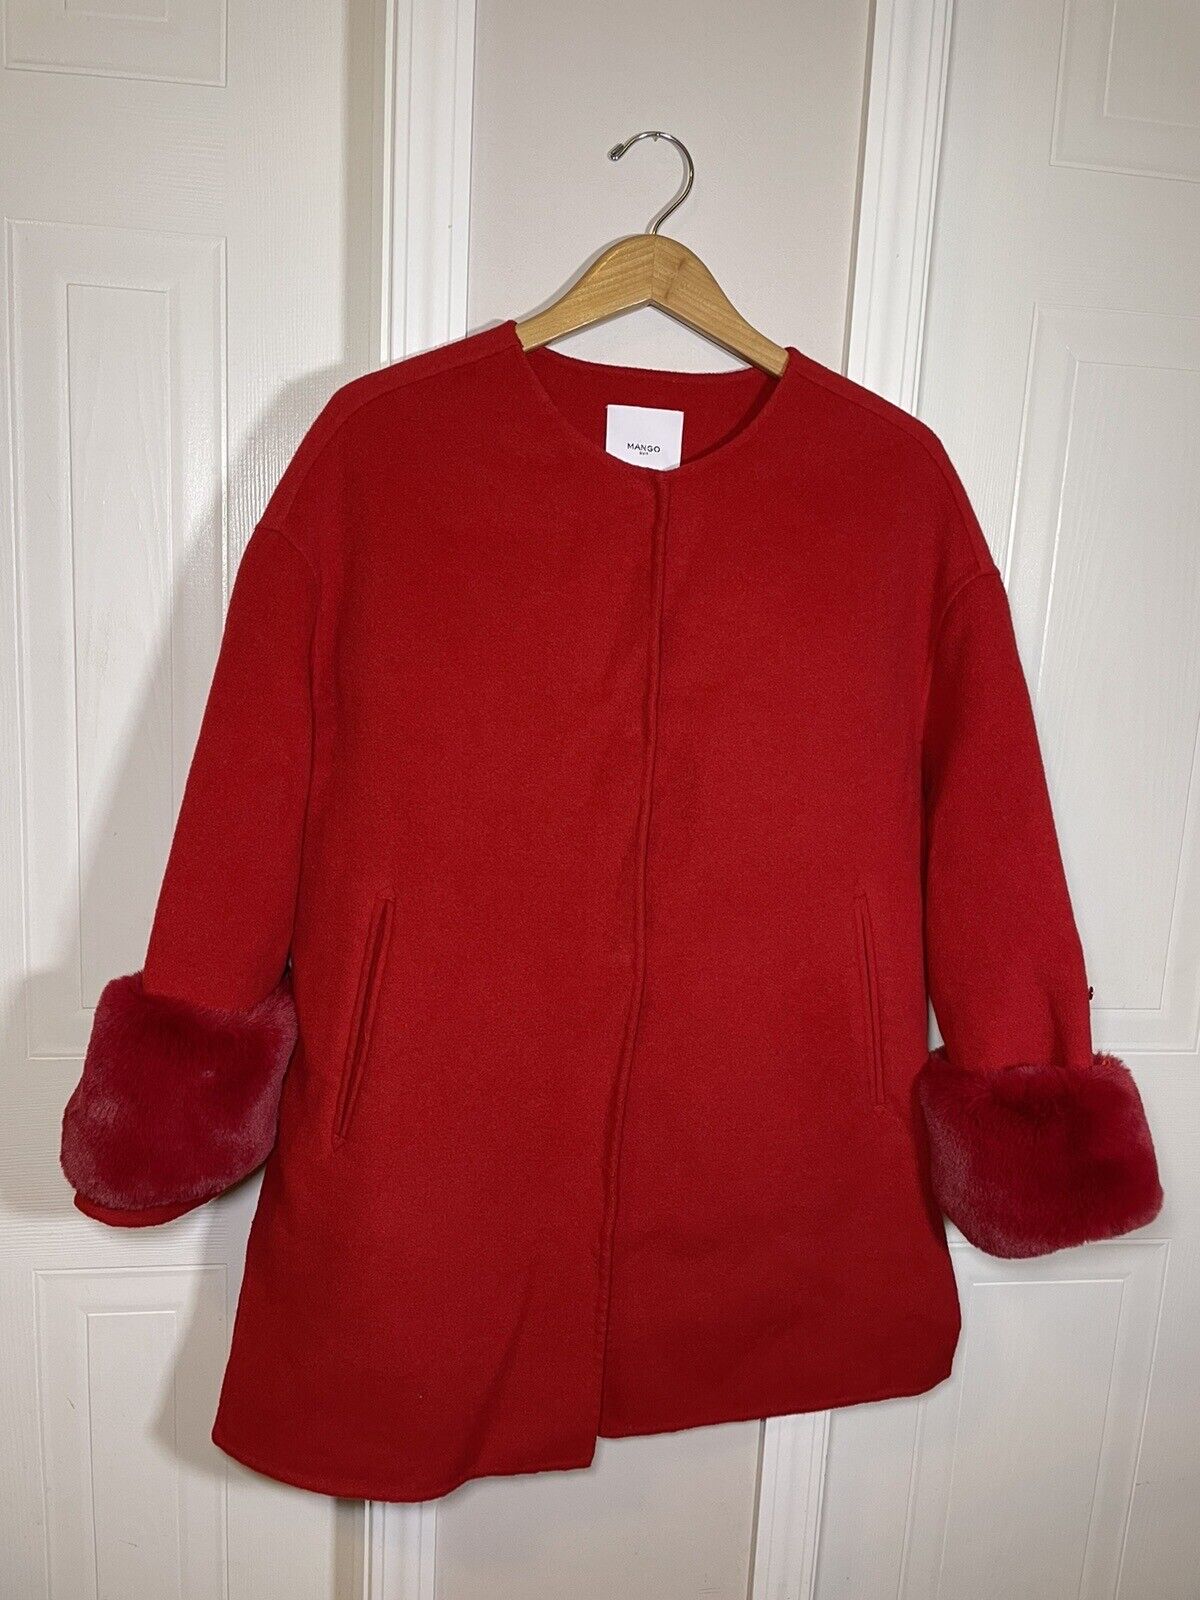 MANGO Women’s XS Red Faux Fur Appliqué Wool Coat … - image 3